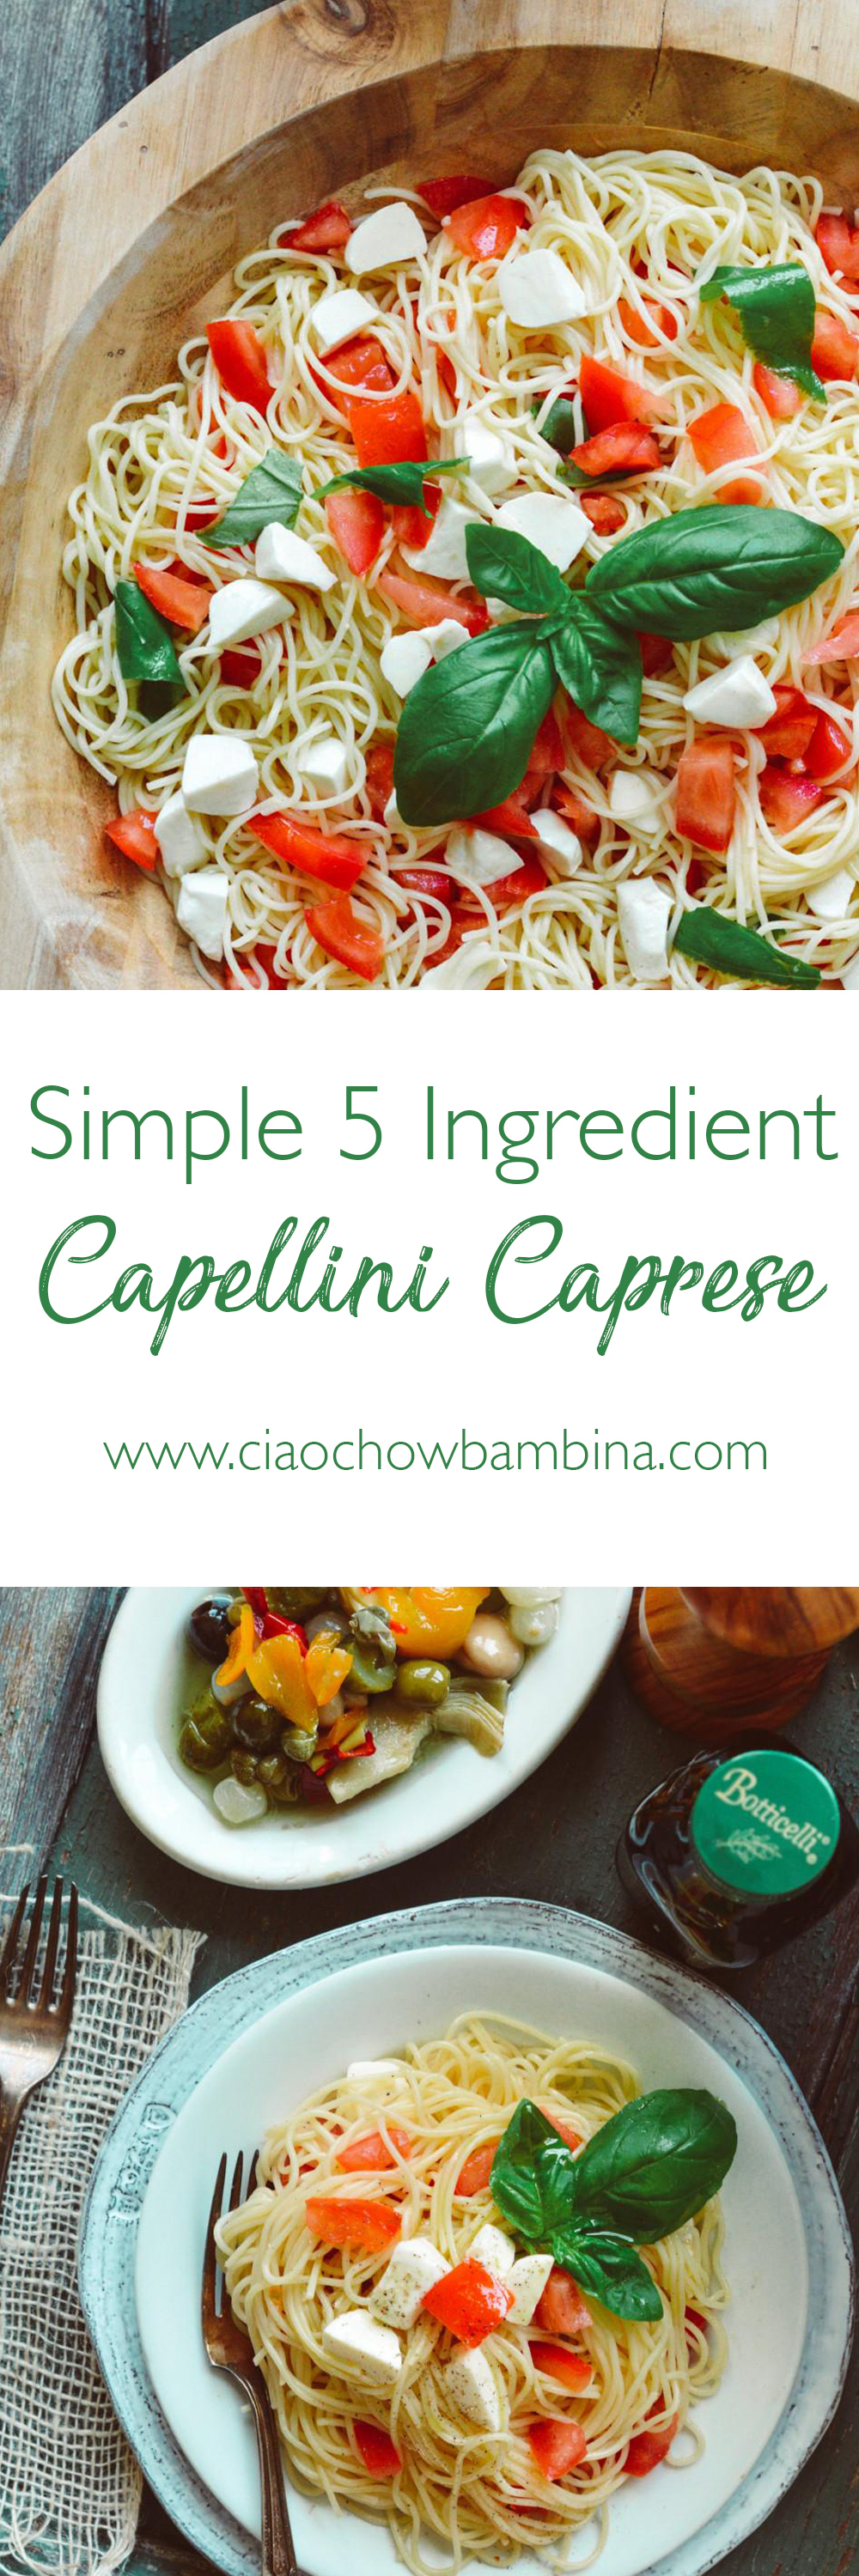 Simple 5 Ingredient Capellini Caprese ciaochowbambina.com